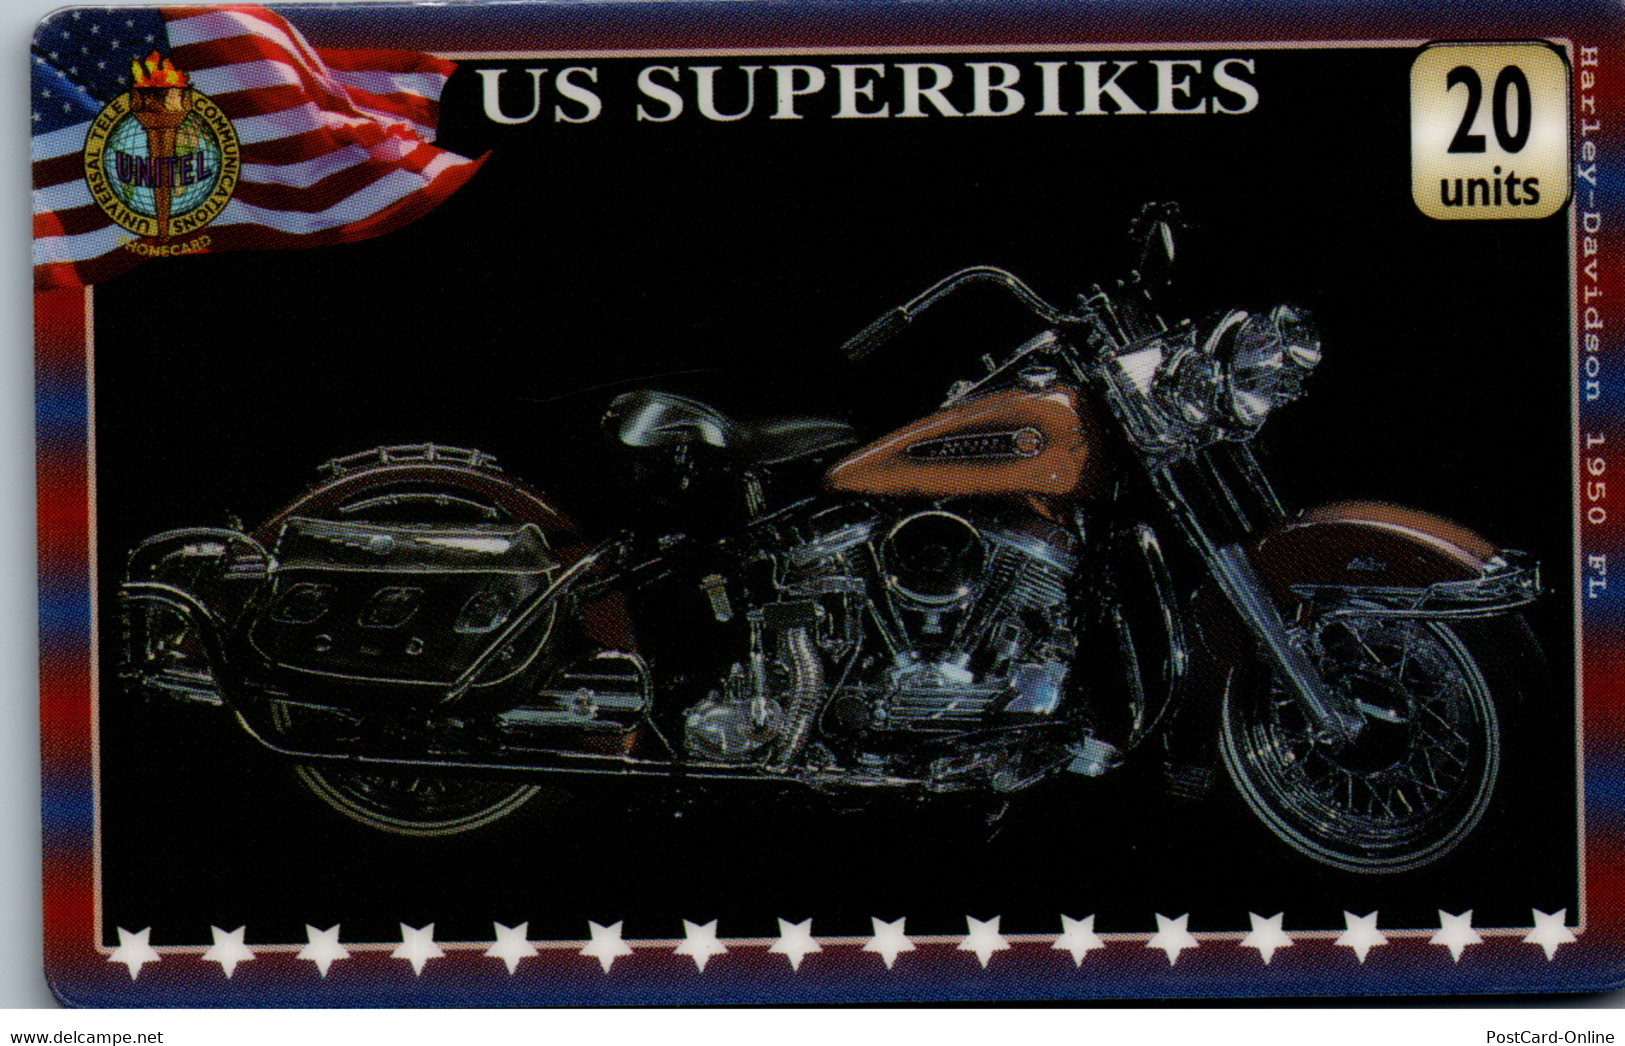 20333 - Großbritannien - UniTel , US Superbikes , Harley Davidson - BT Kaarten Voor Hele Wereld (Vooraf Betaald)